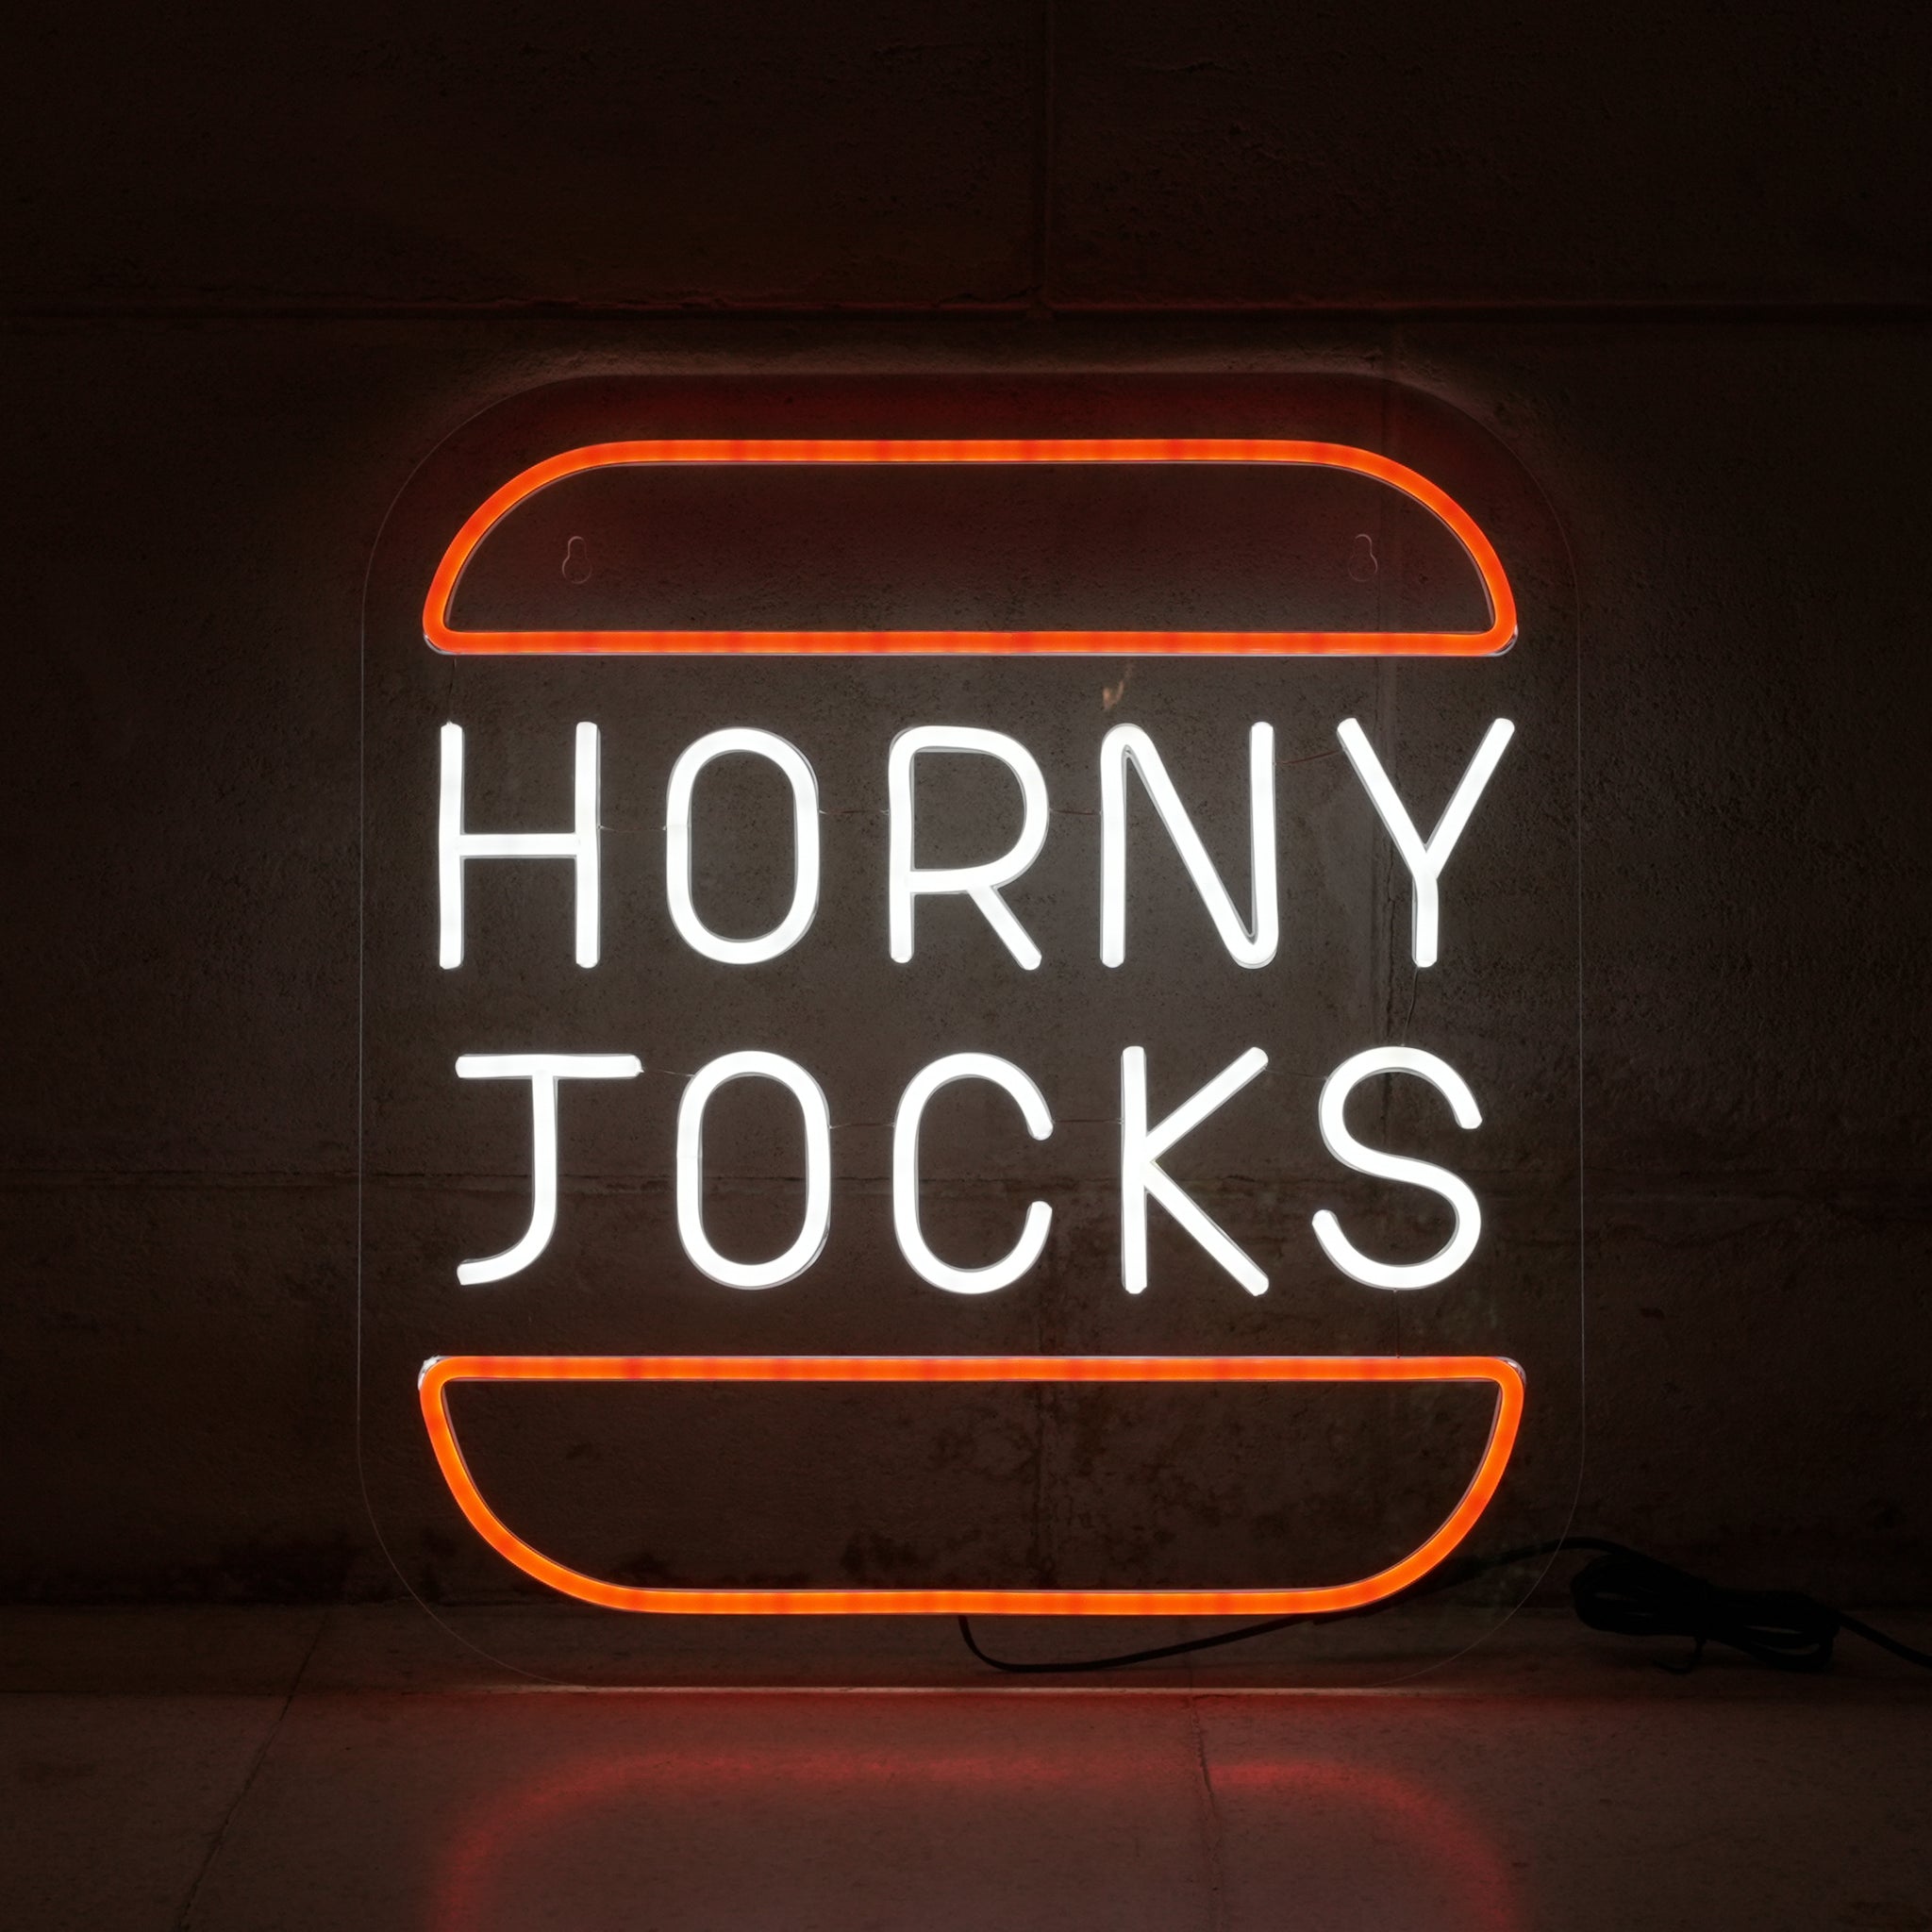 Horny Jocks Limited Edition Neon Paul Yore